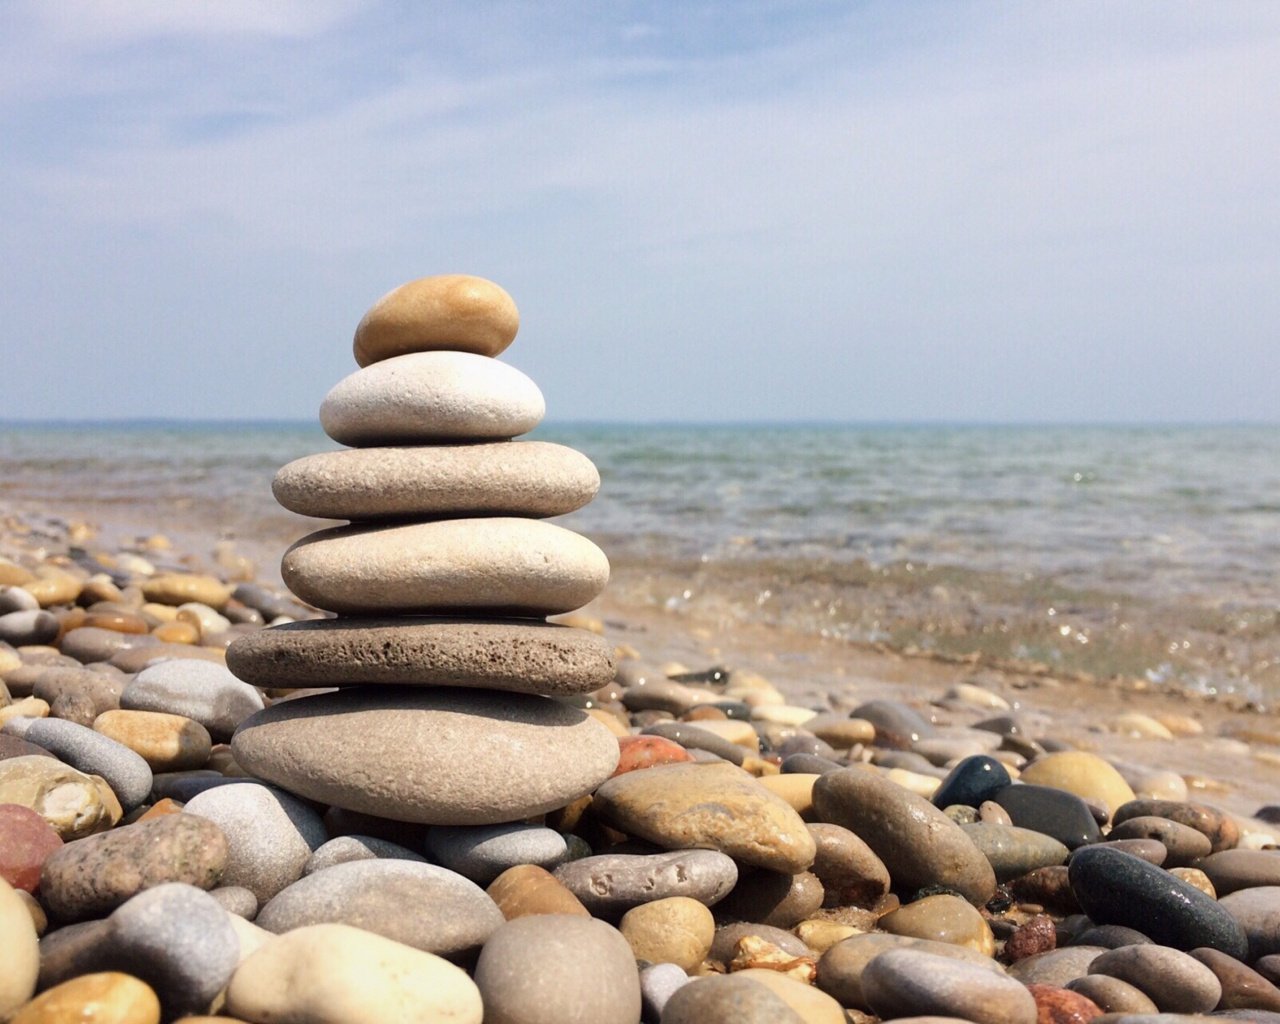 Friend stone. Каменный пляж. Камни на пляже. Пляж галька. Камушки на берегу моря.